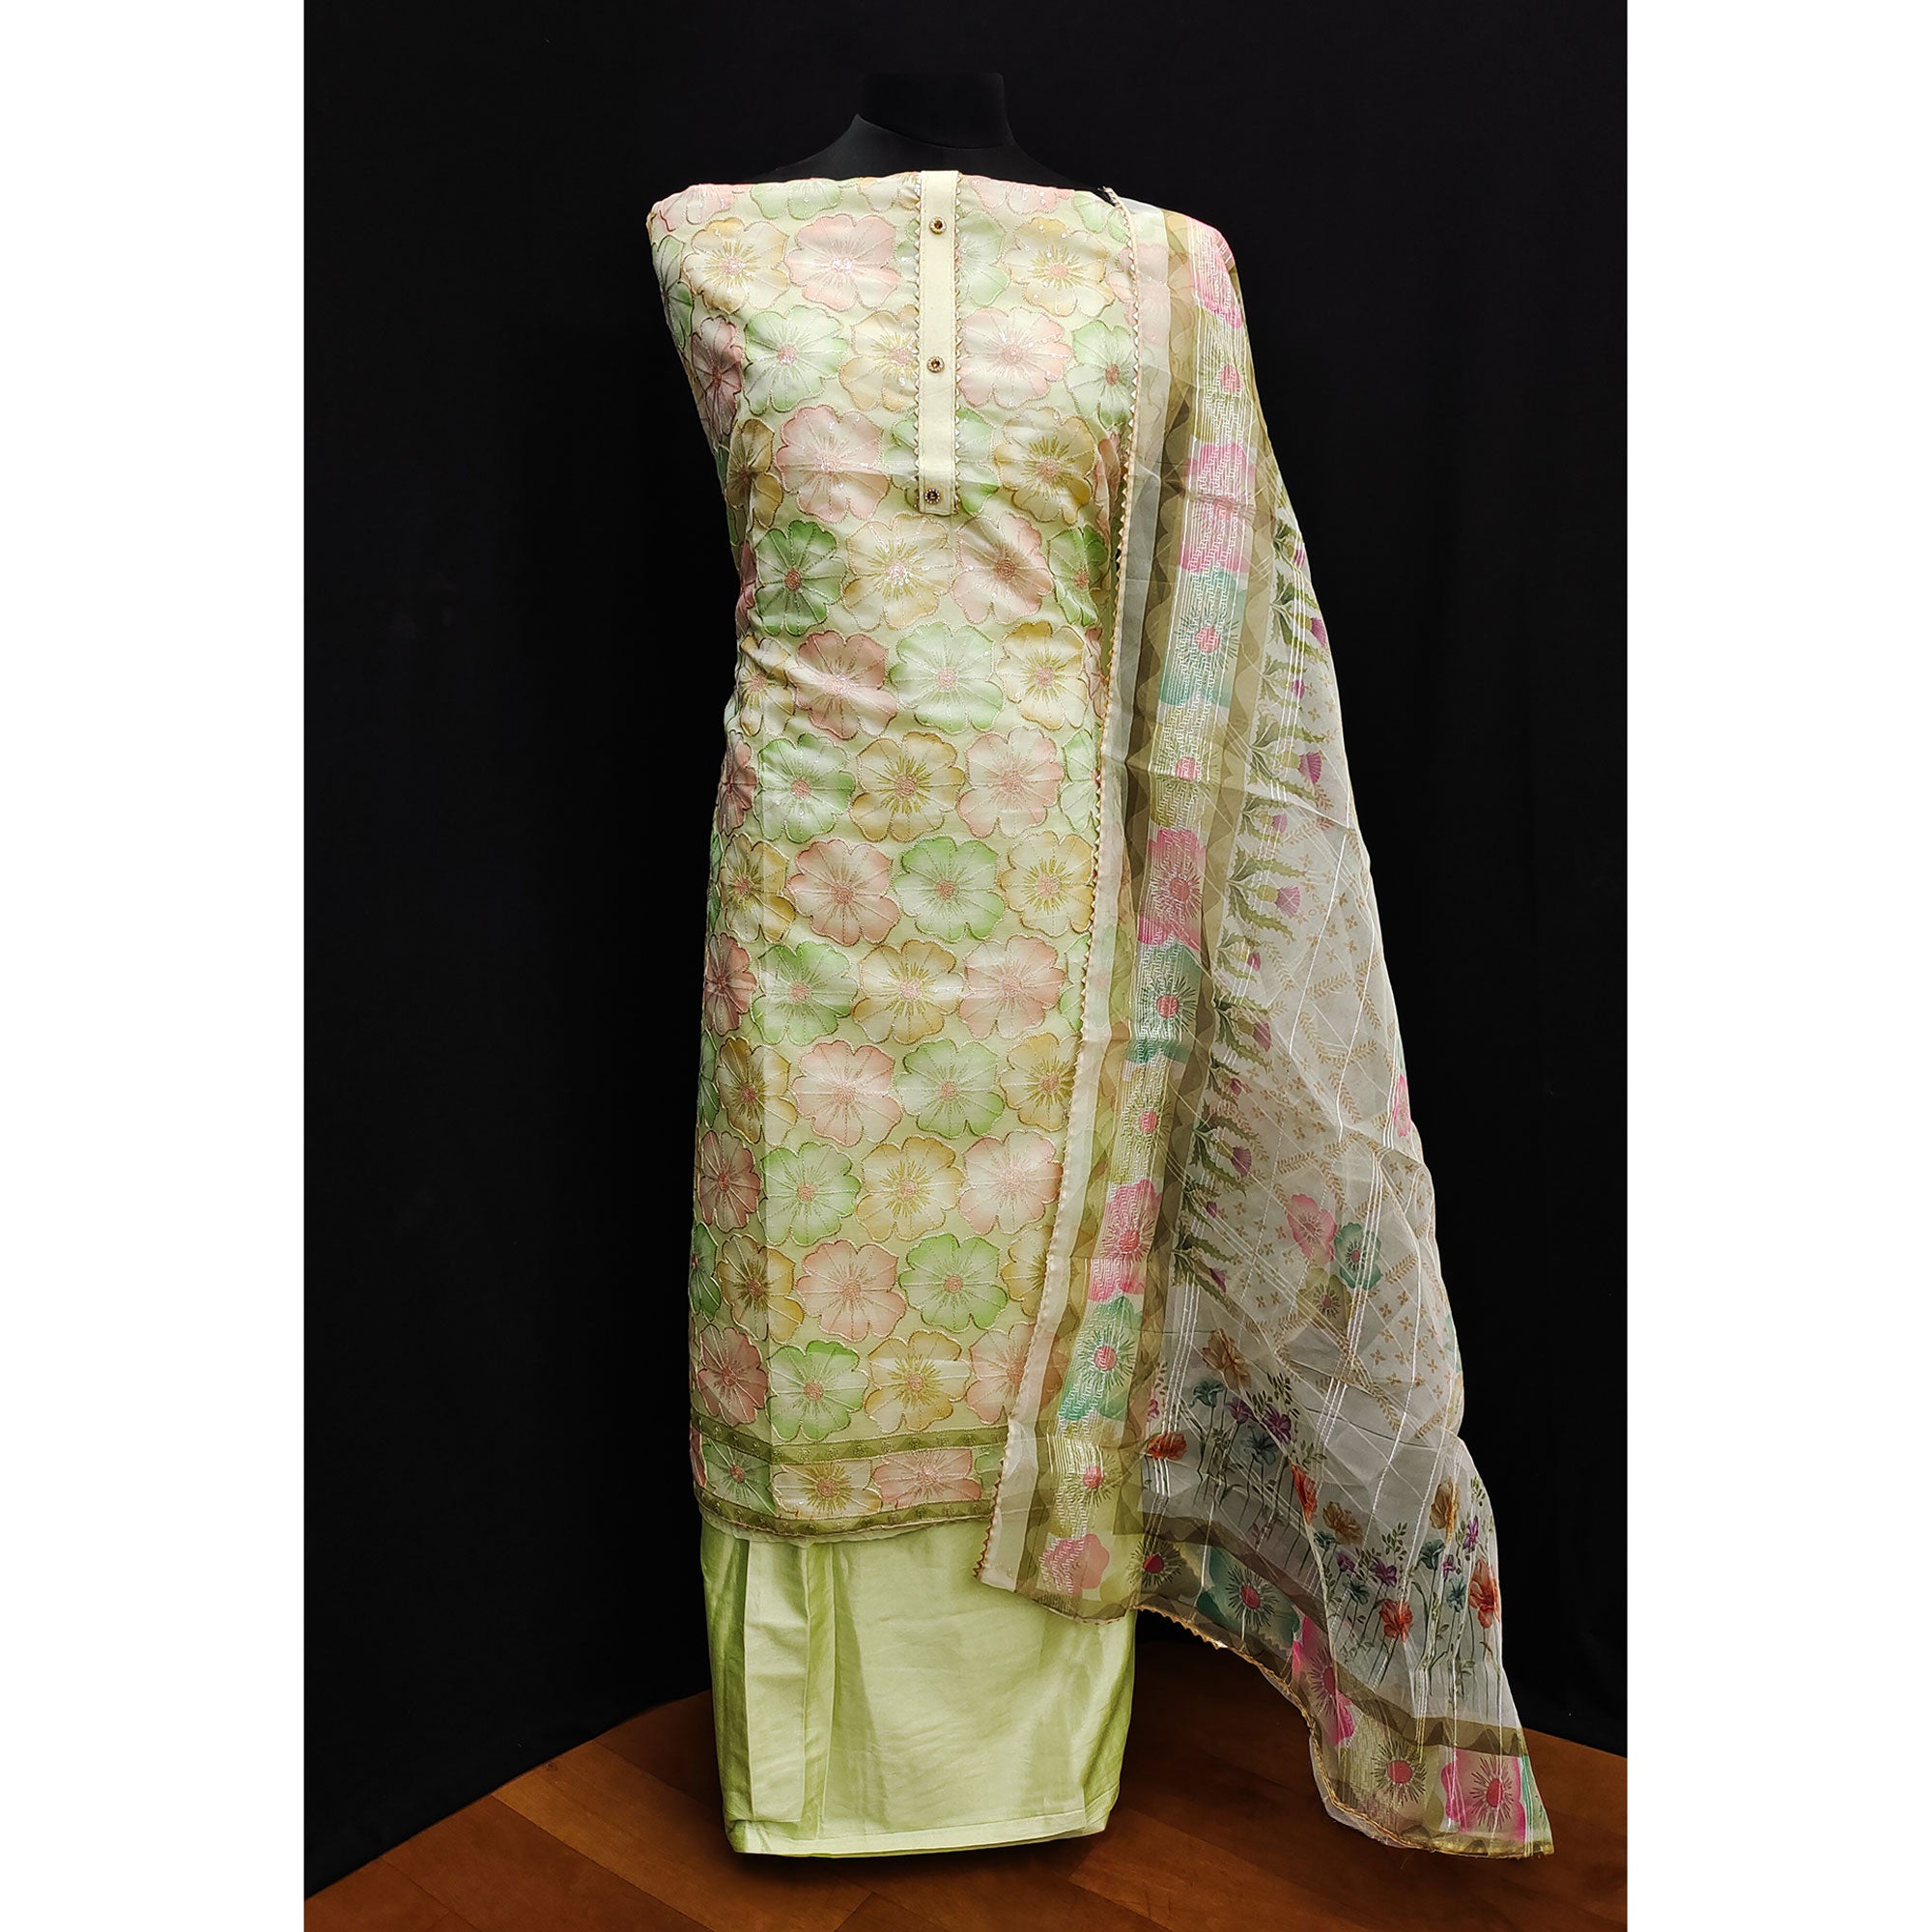 Green Floral Printed Organza Dress Material